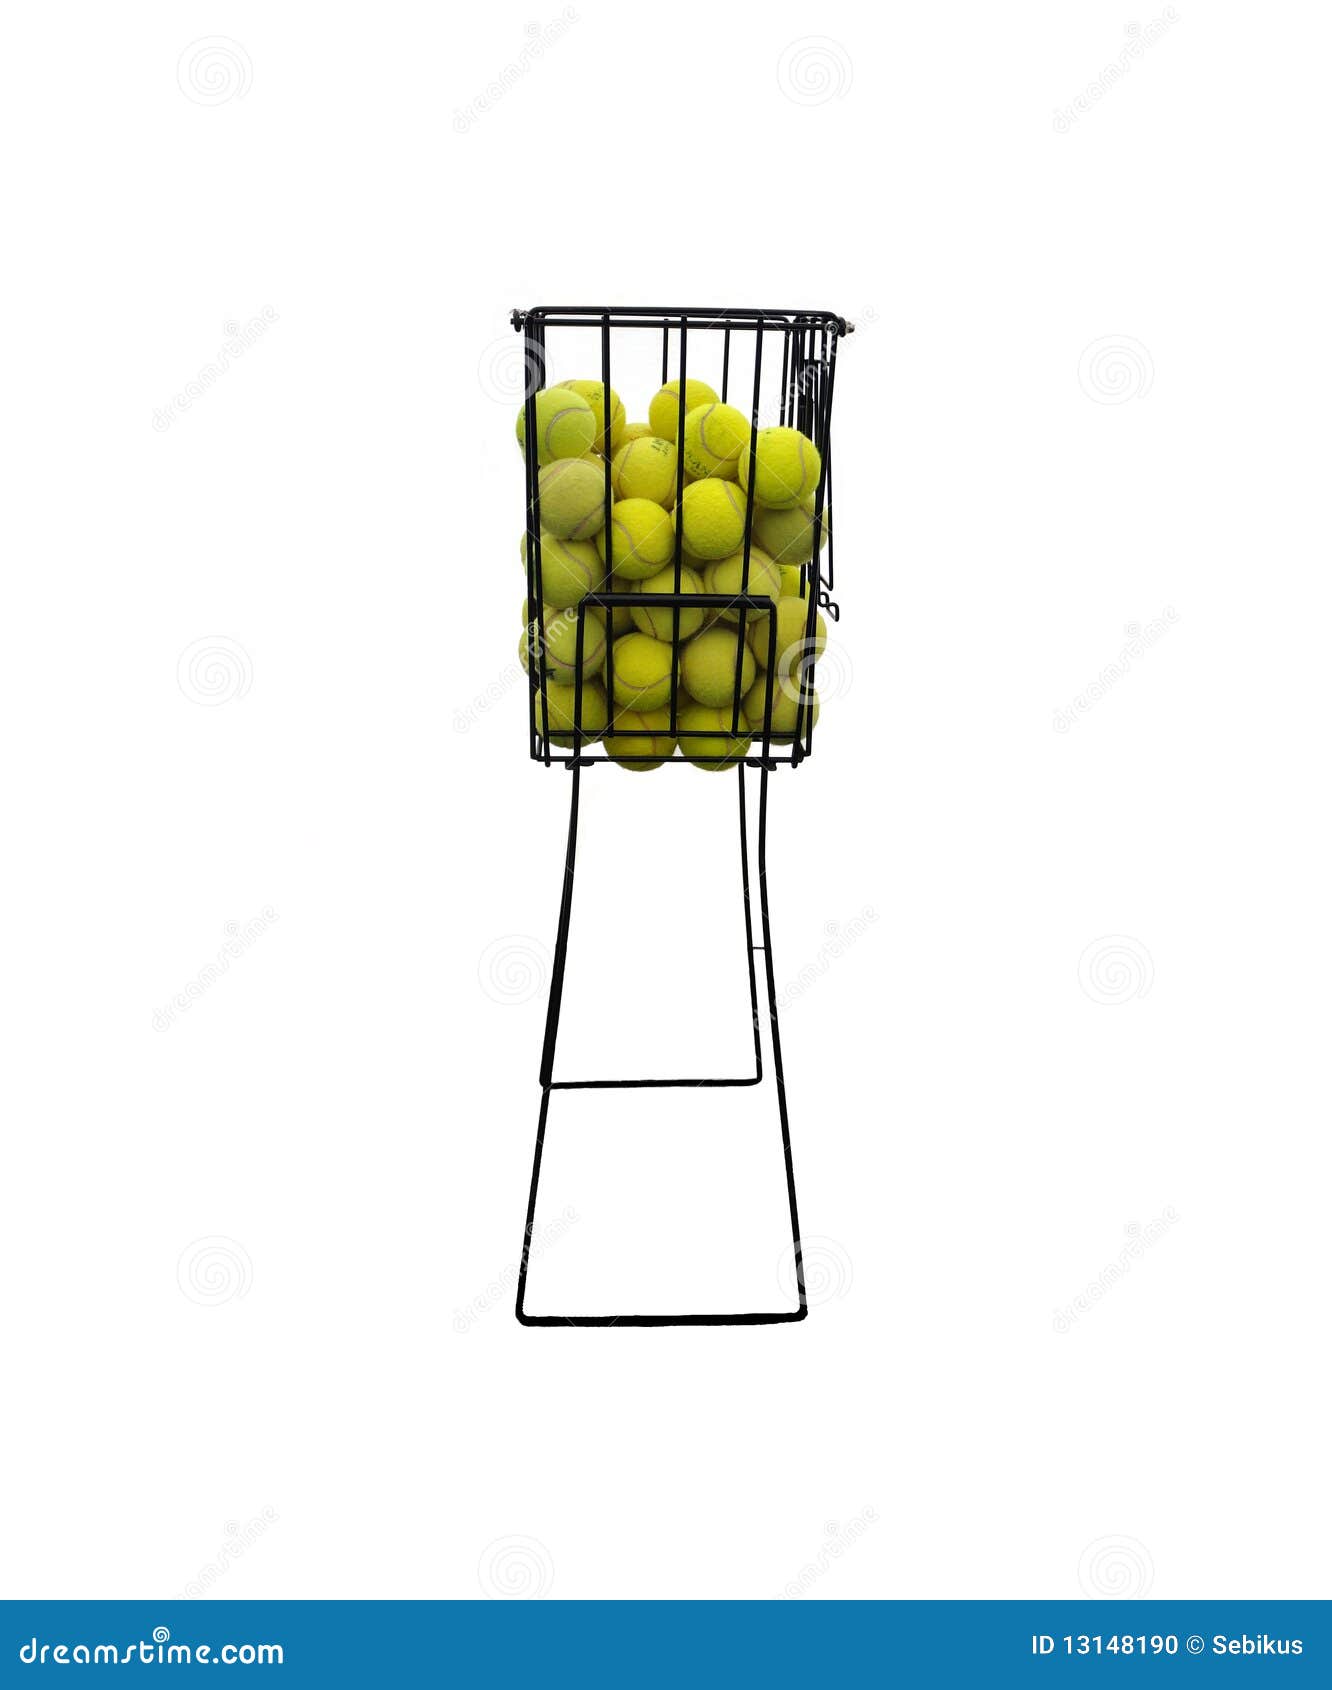 basket of tenis balls